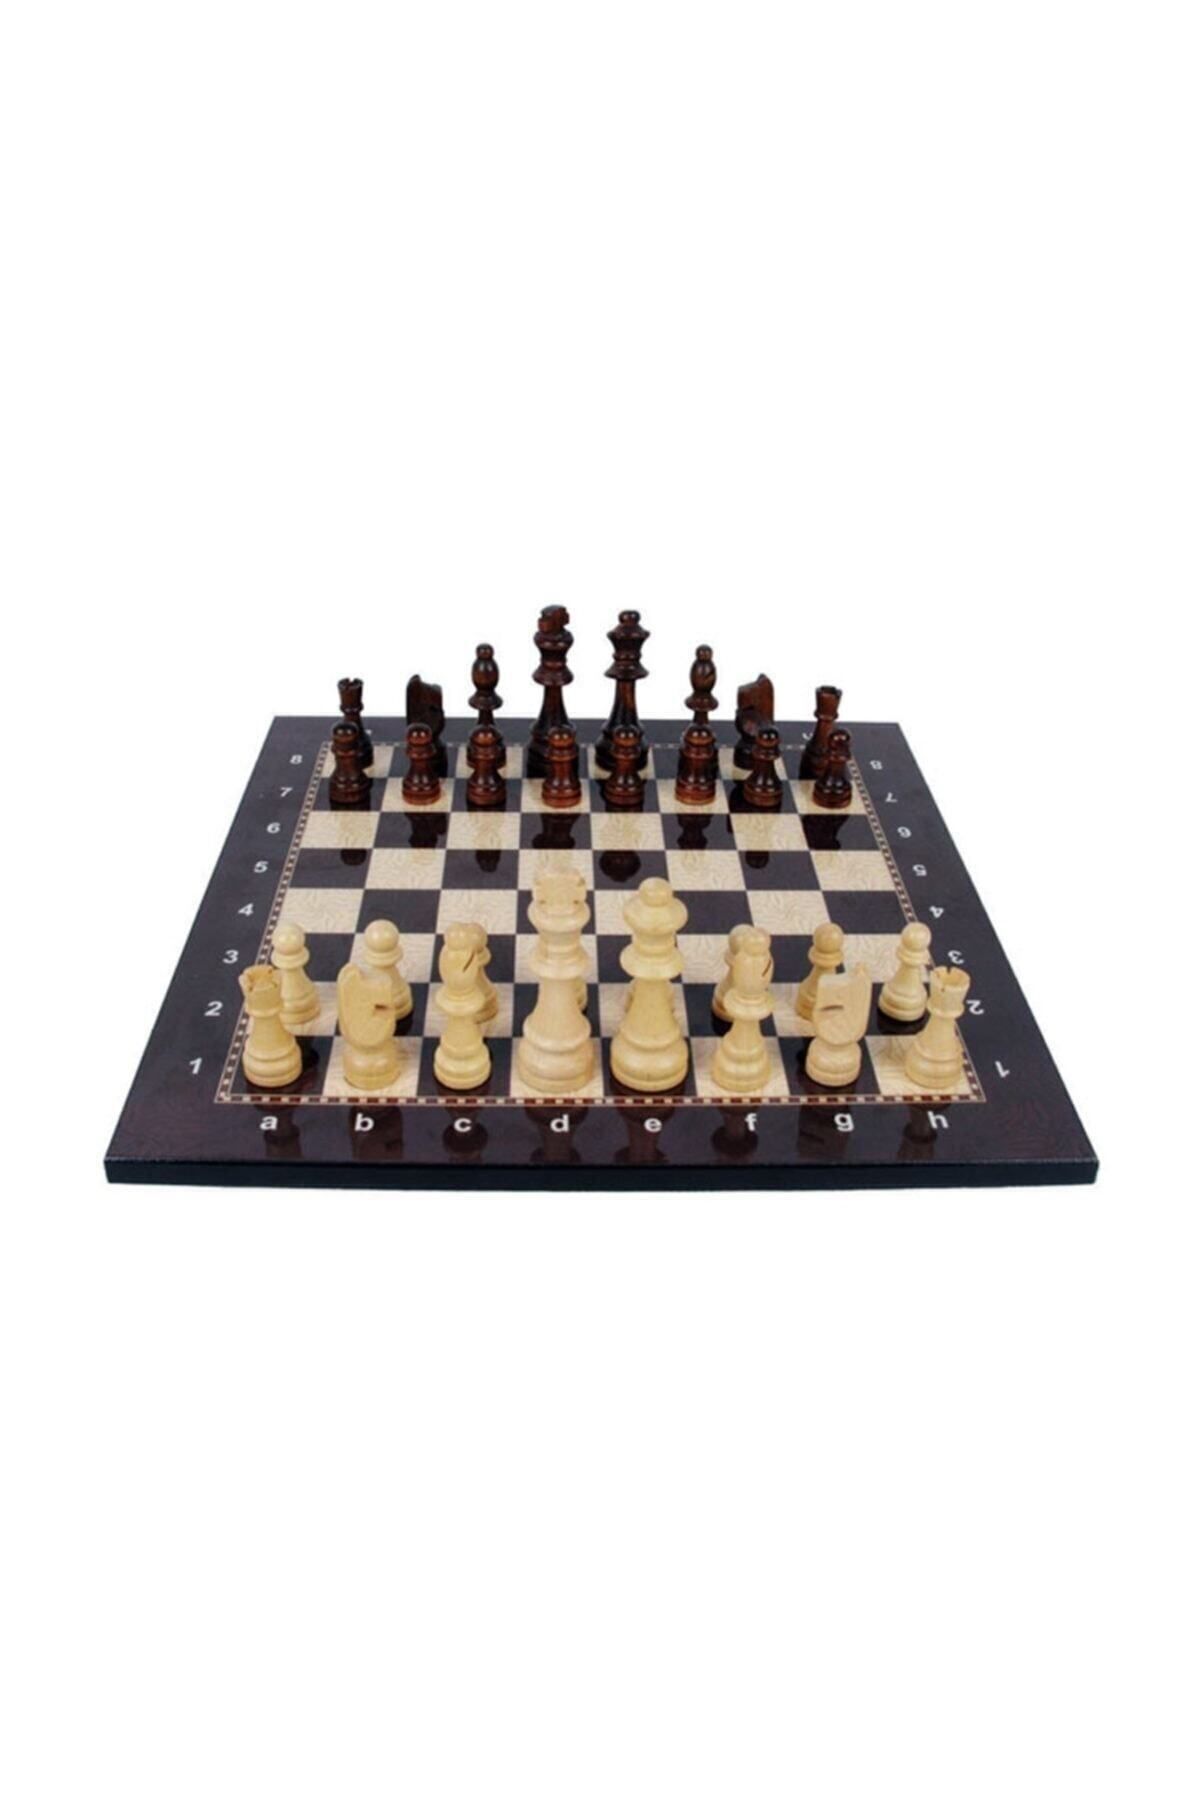 checkmate Lüks Ağaç Ahşap Satranç Takımı Seti Ahşap Figür Dama Üstün Kalite 36x36